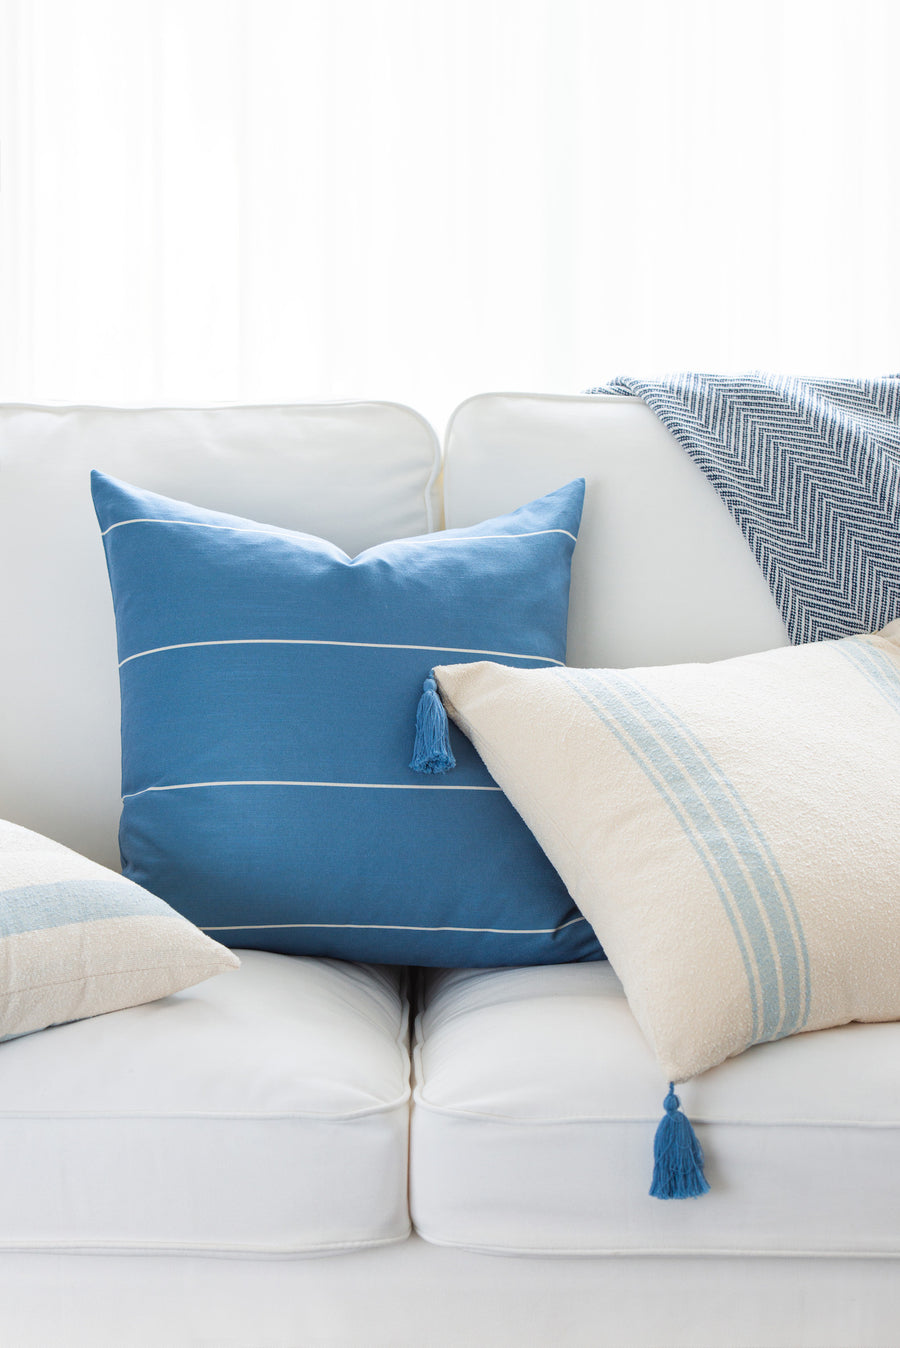 Modern Boho Outdoor Pillow Cover, Blue Striped, 20